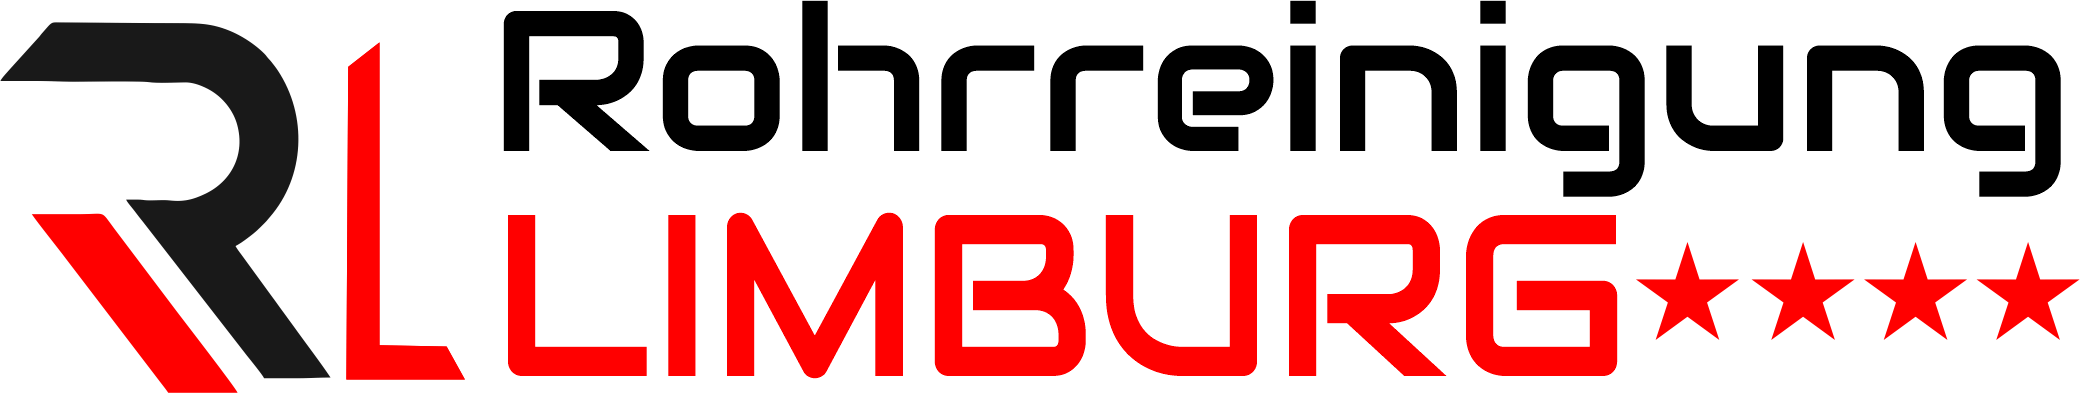 Rohrreinigung Limburg Logo